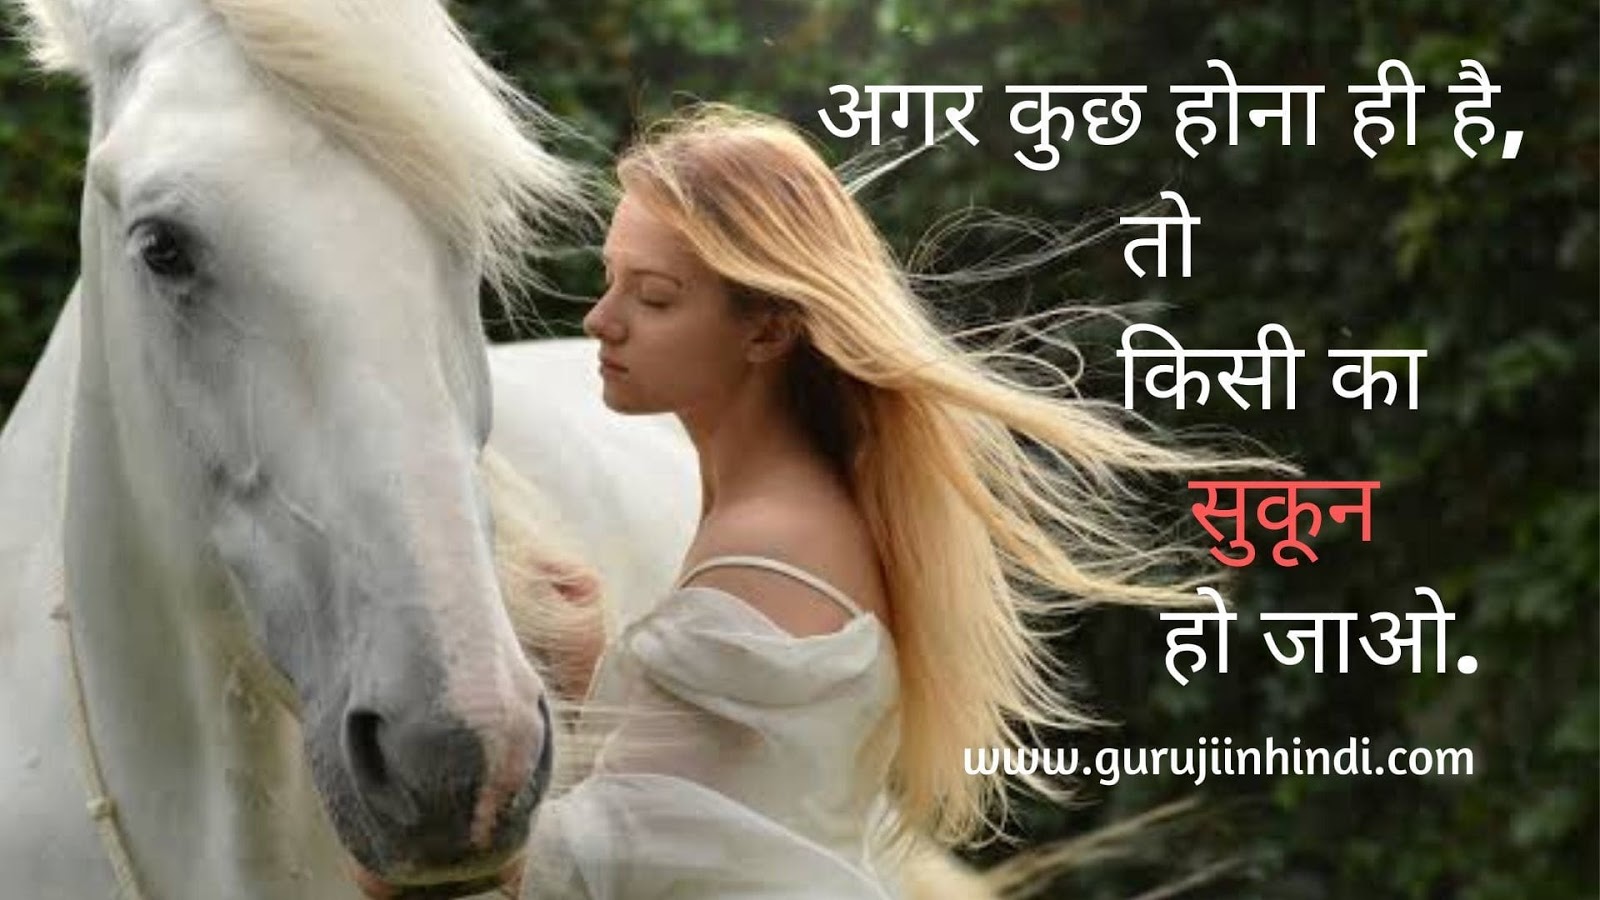 Good Morning Love Quotes In Hindi | लव कोट्स हिंदी मे.